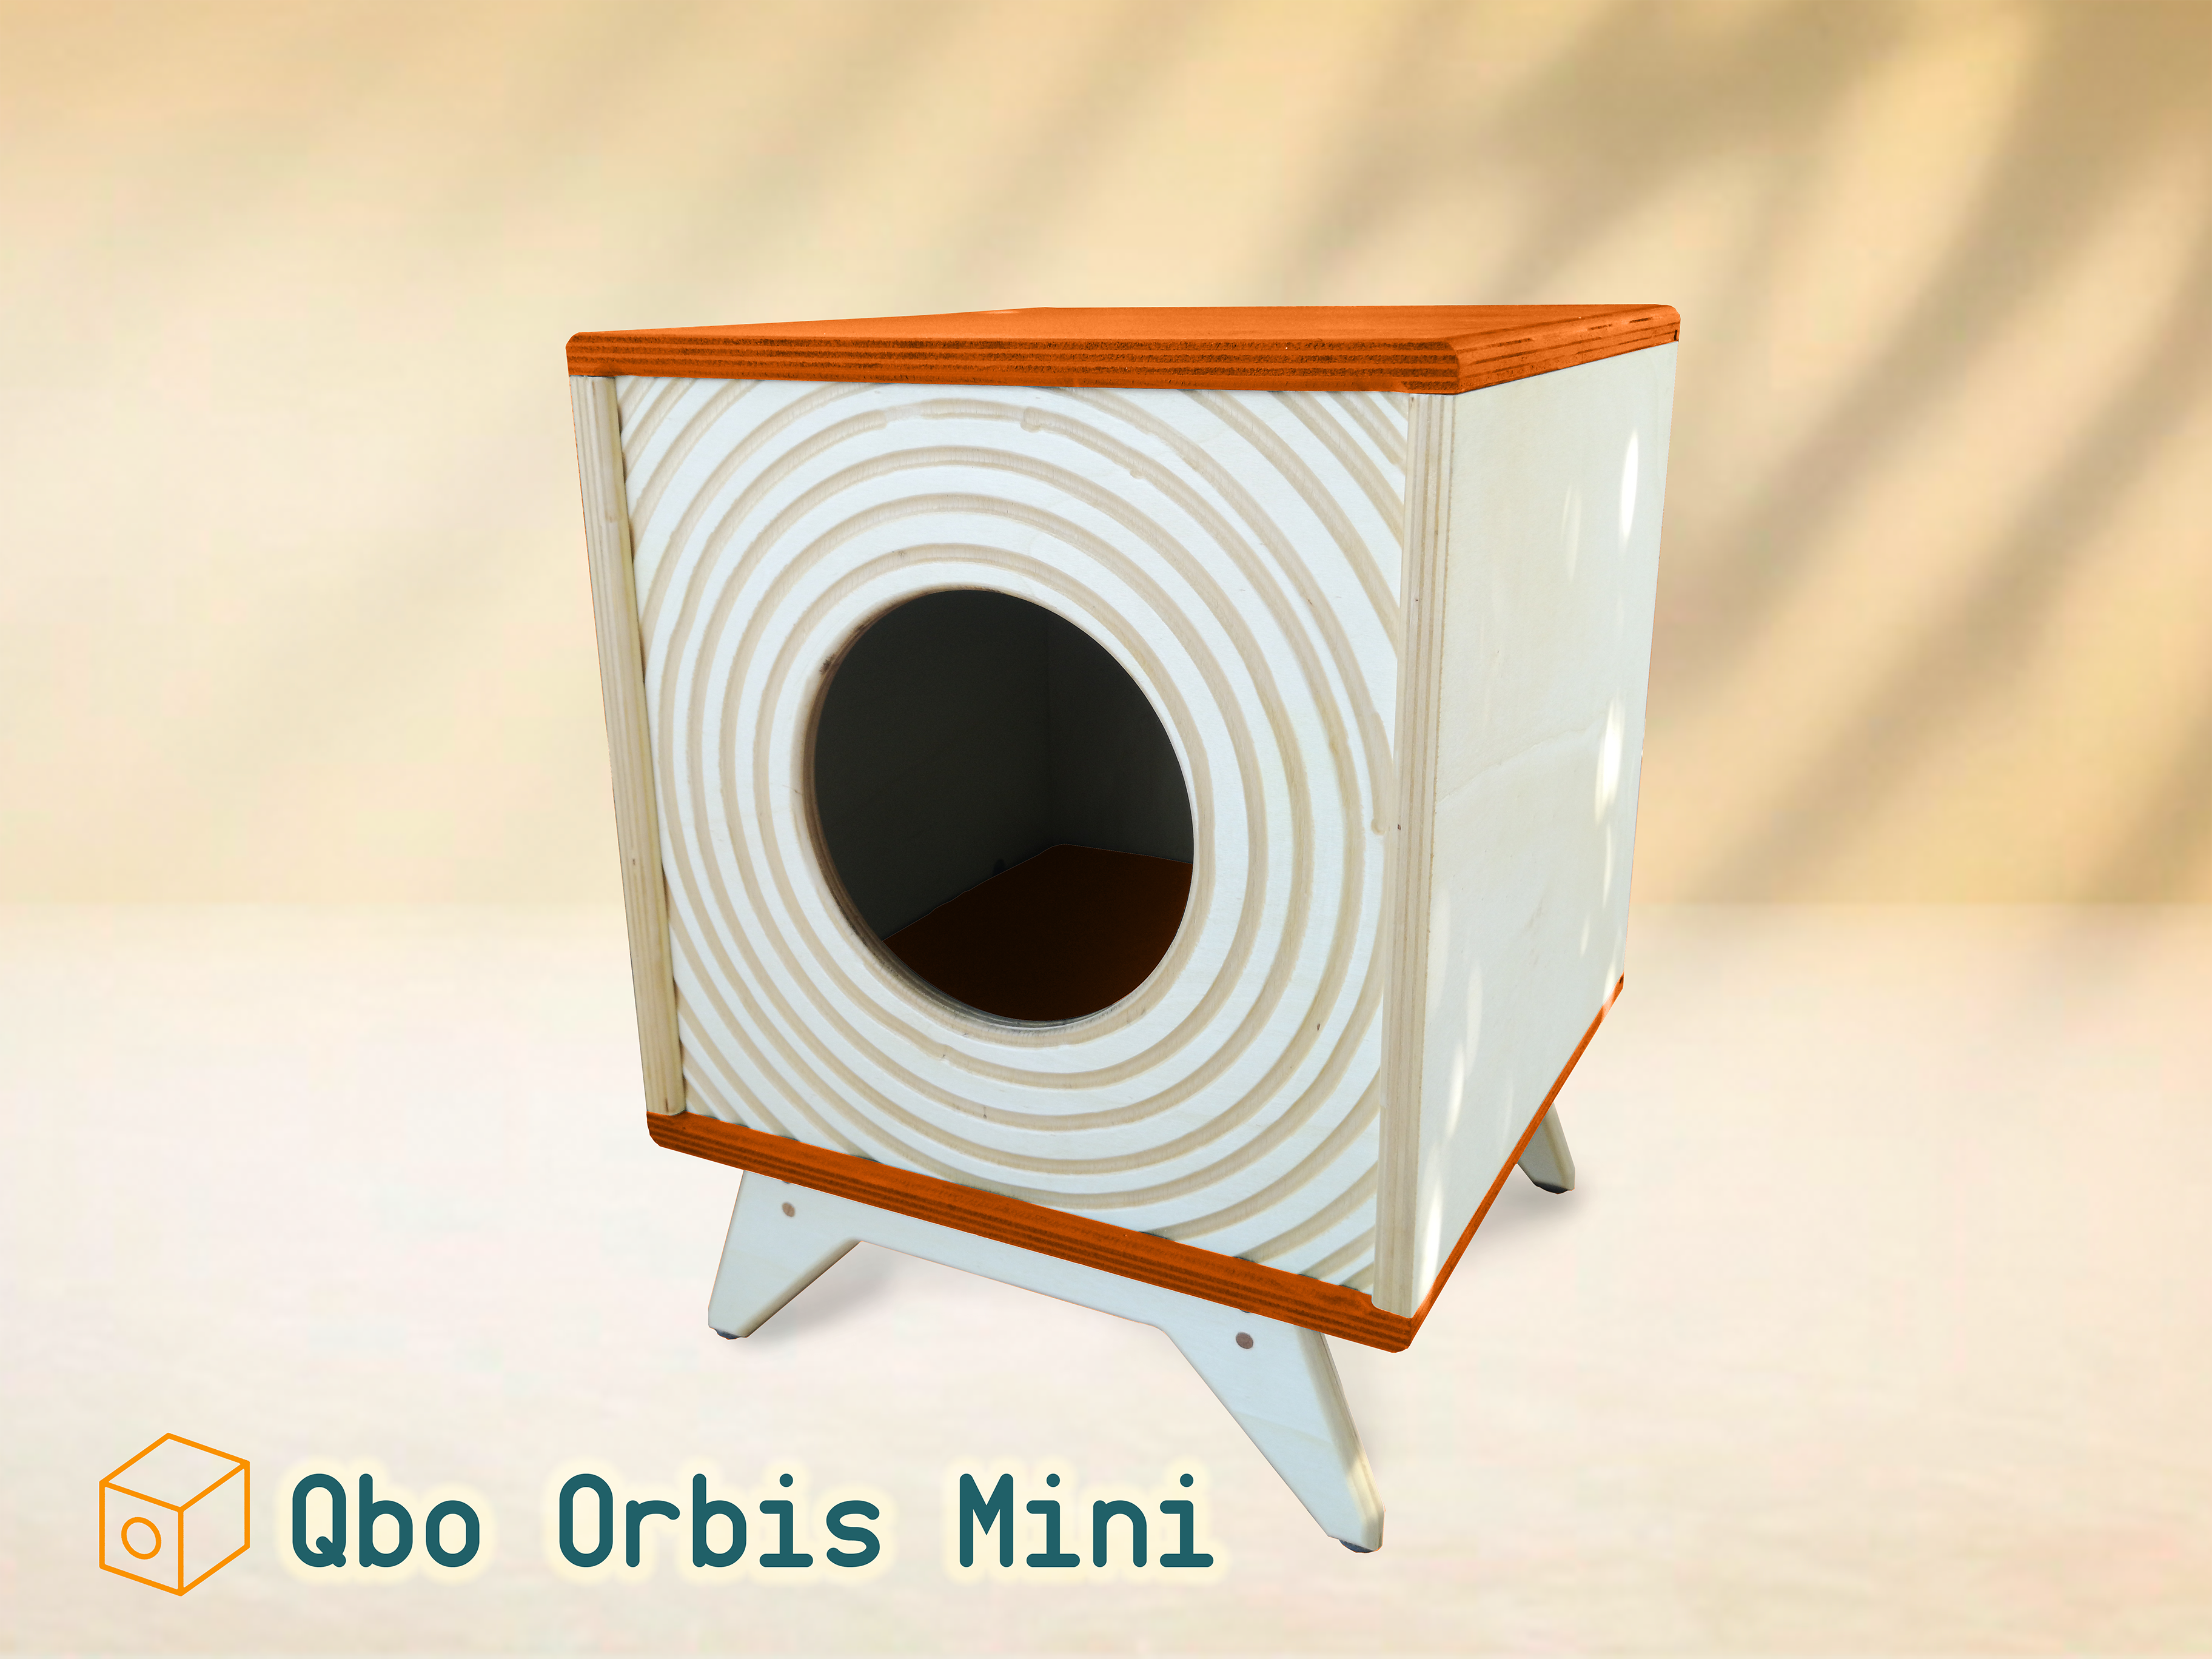 Qbo Orbis Mini - Tropical Orange - Qbo Pets